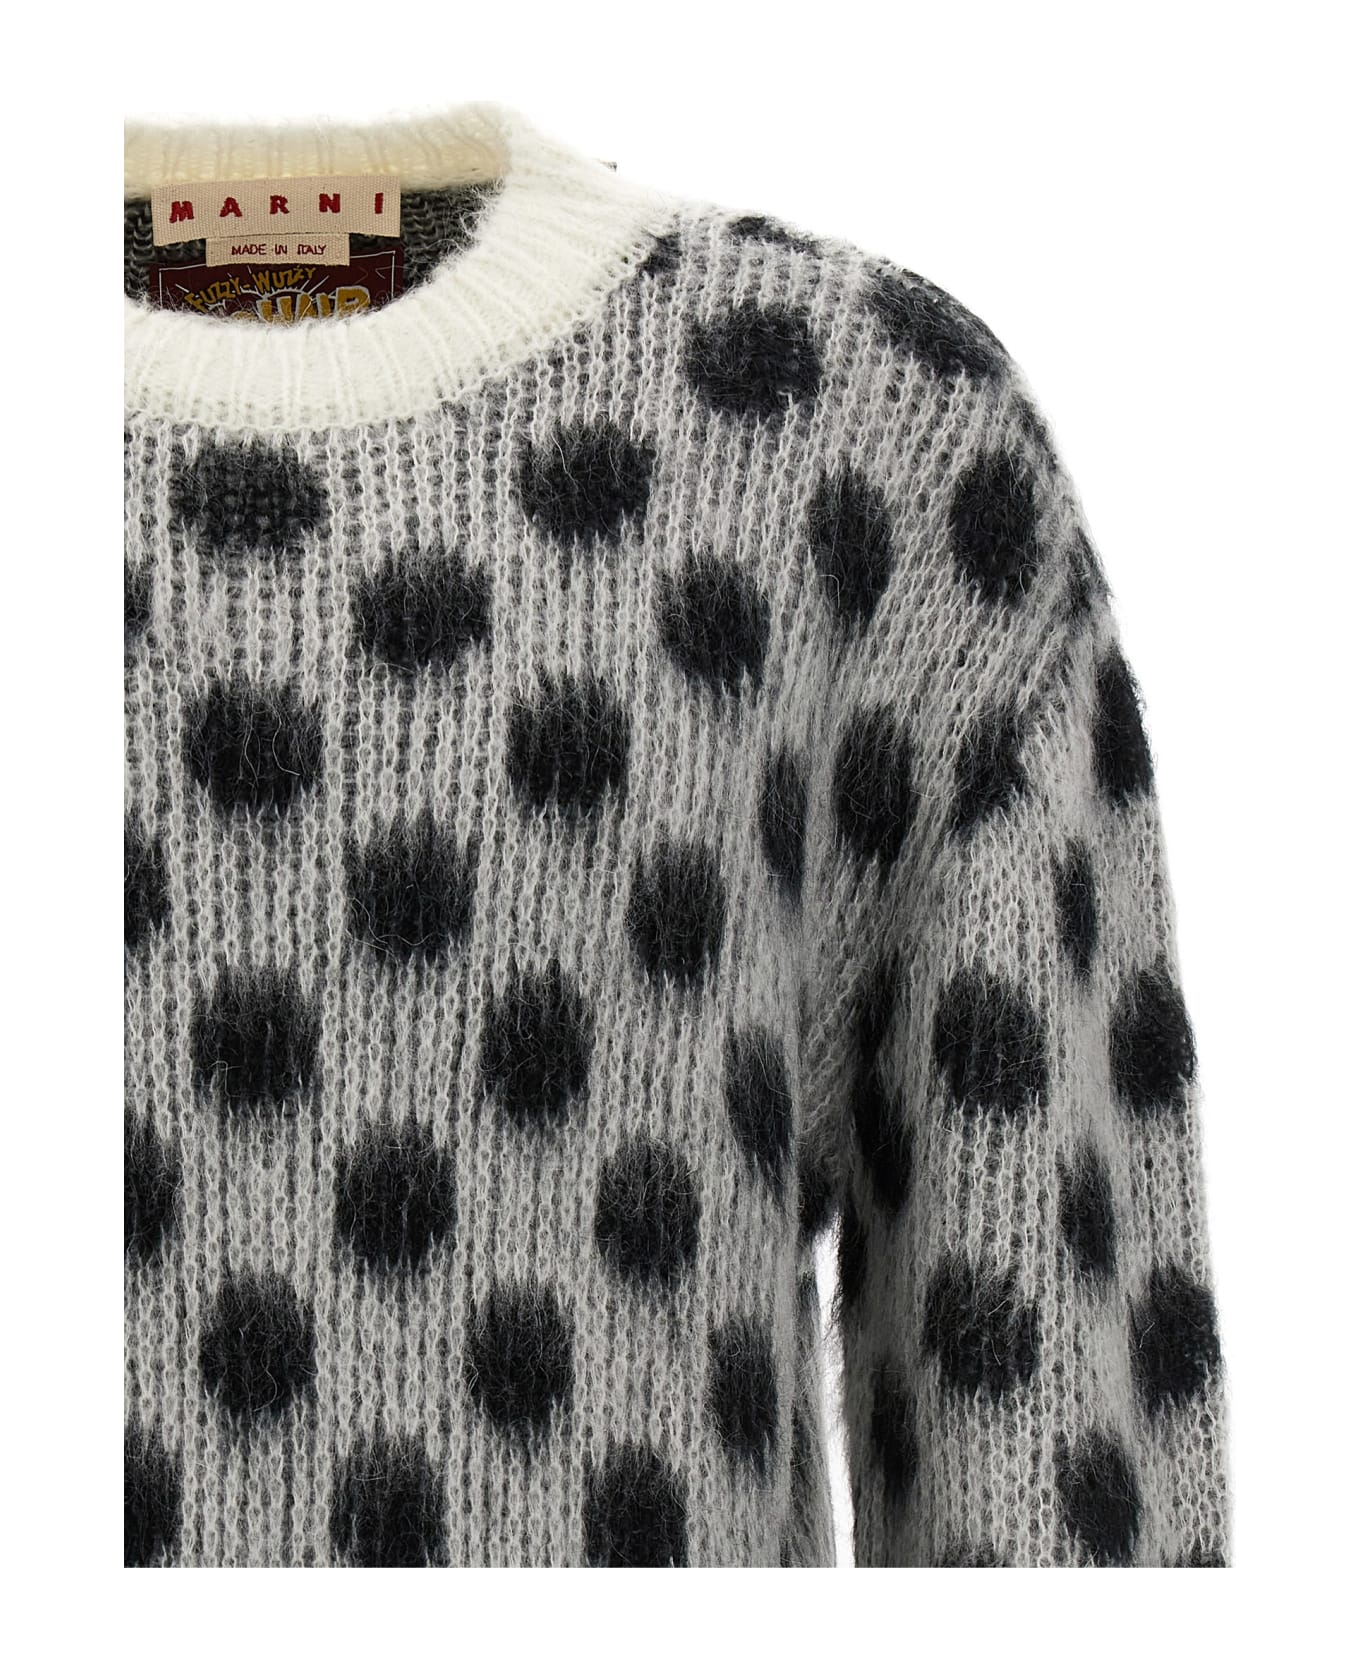 Marni Polka Dot Sweater - White/Black